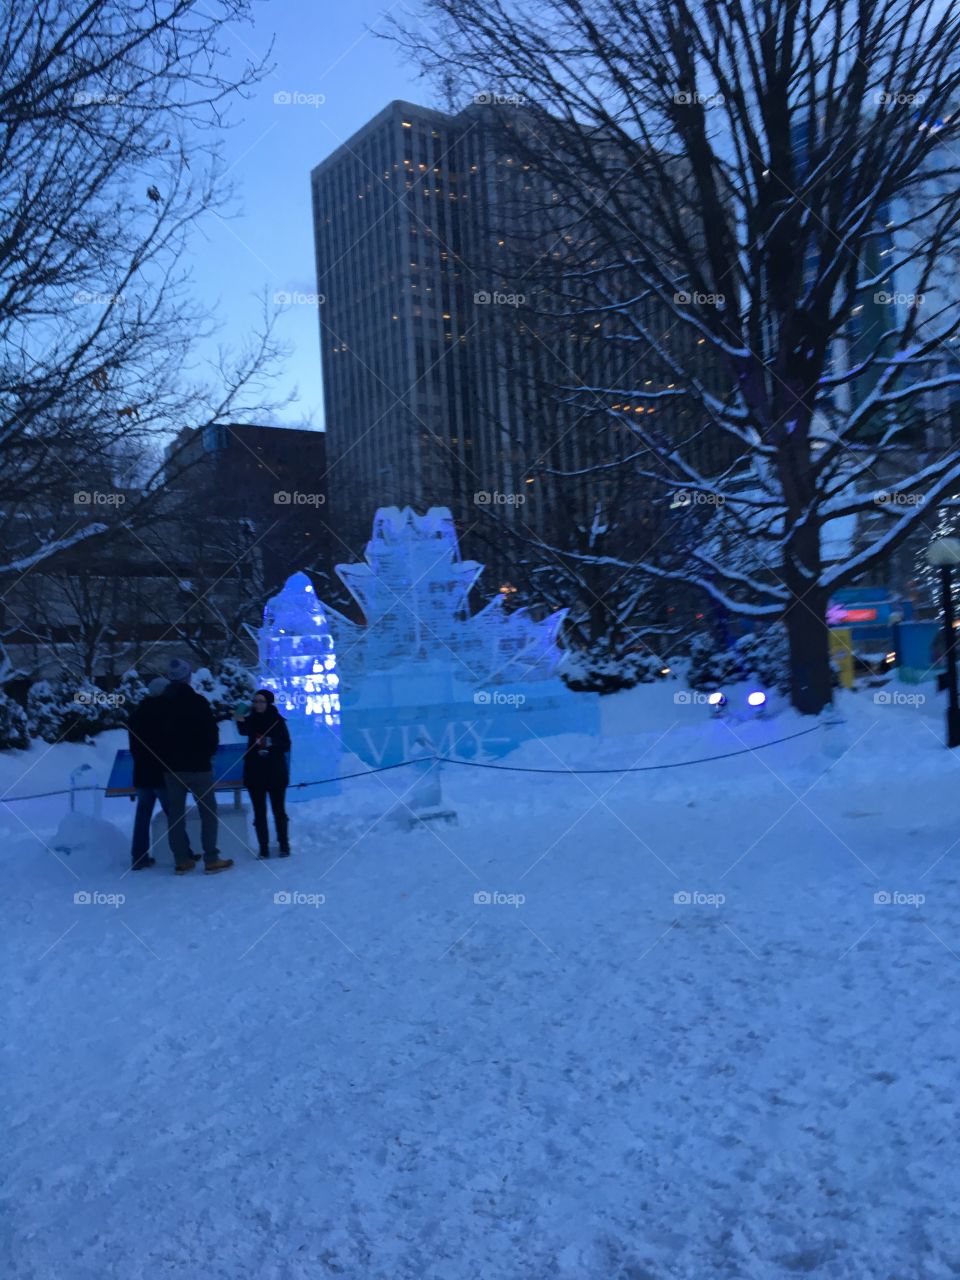 Maple leaf ice sculpture